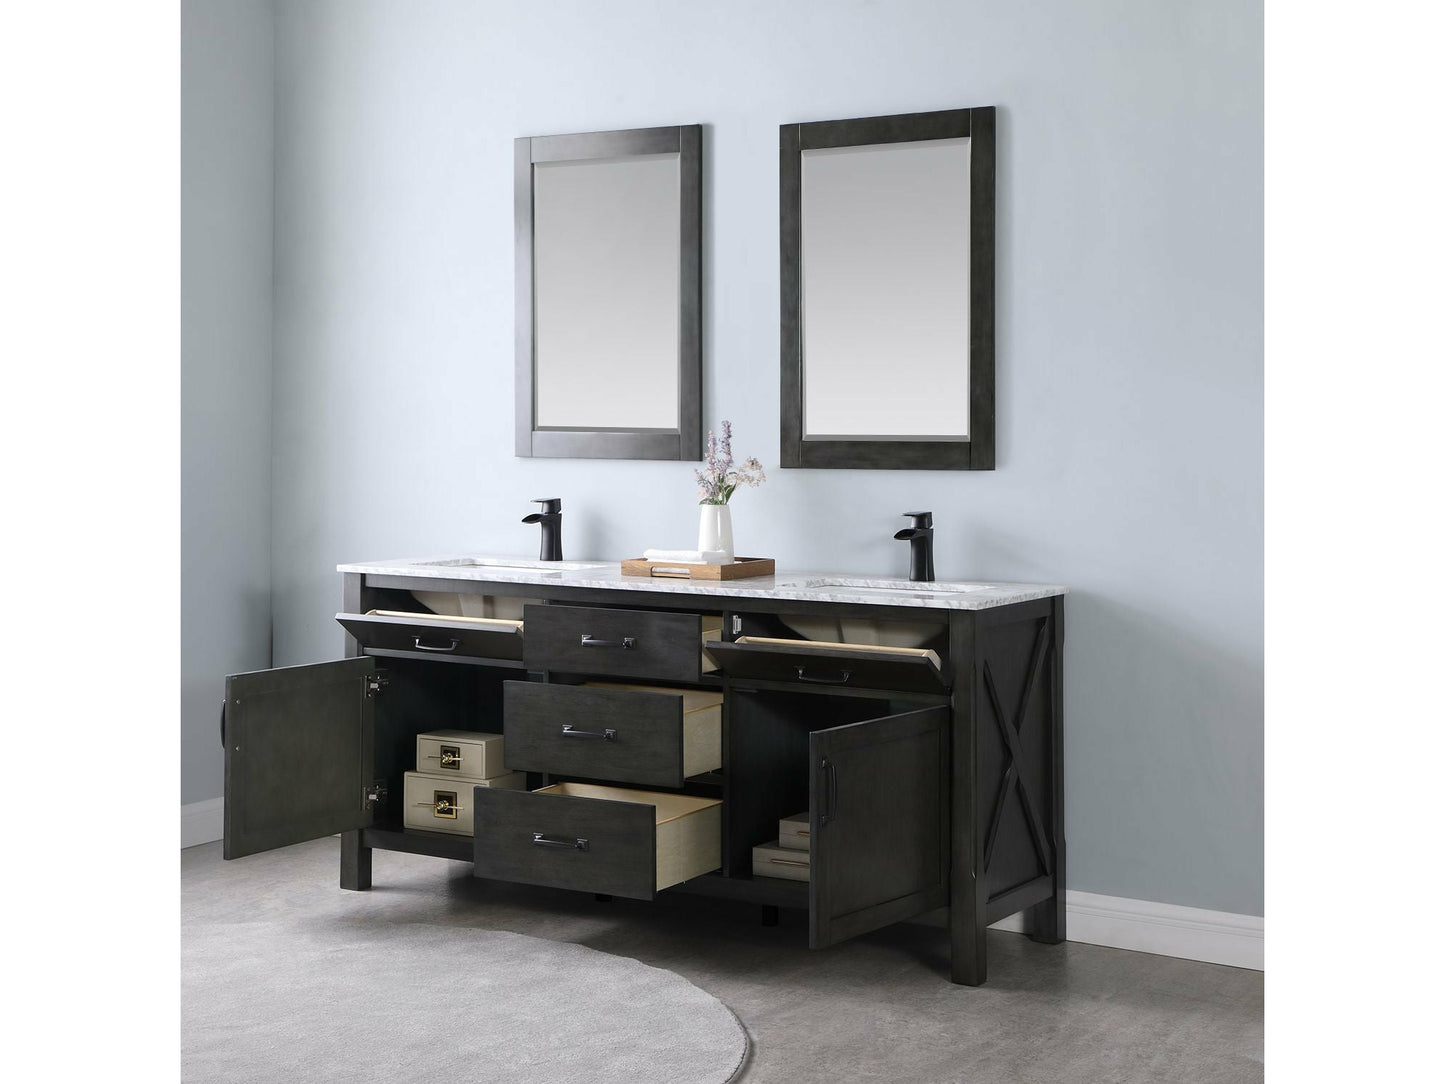 Altair Design Maribella 72" Double Bathroom Vanity Set in Rust Black With Carrara White Marble Countertop with Mirror